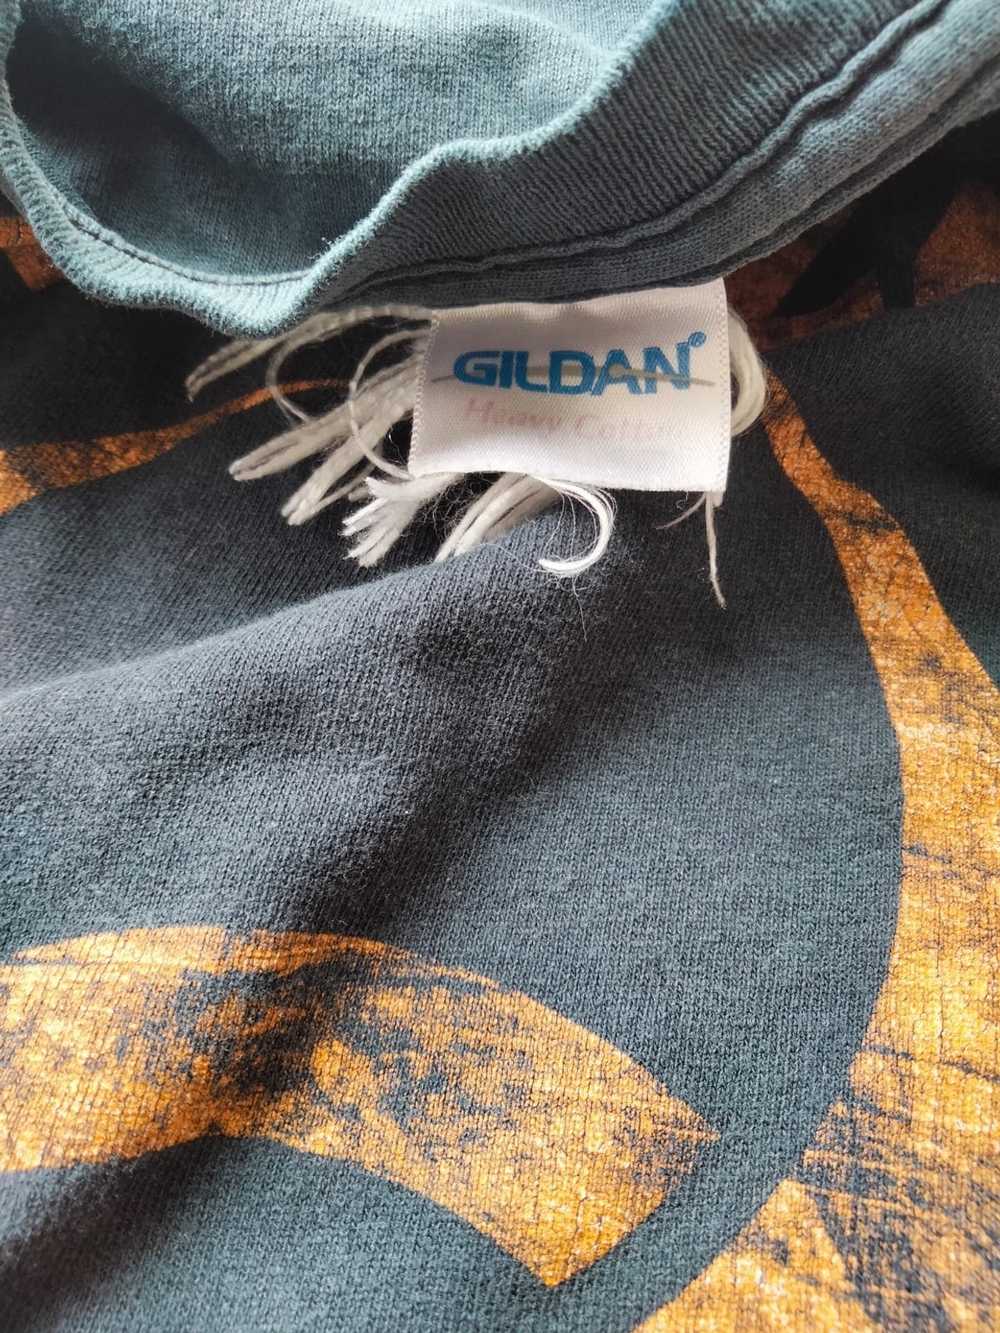 Band Tees × Gildan × Rock T Shirt Biohazard damag… - image 7